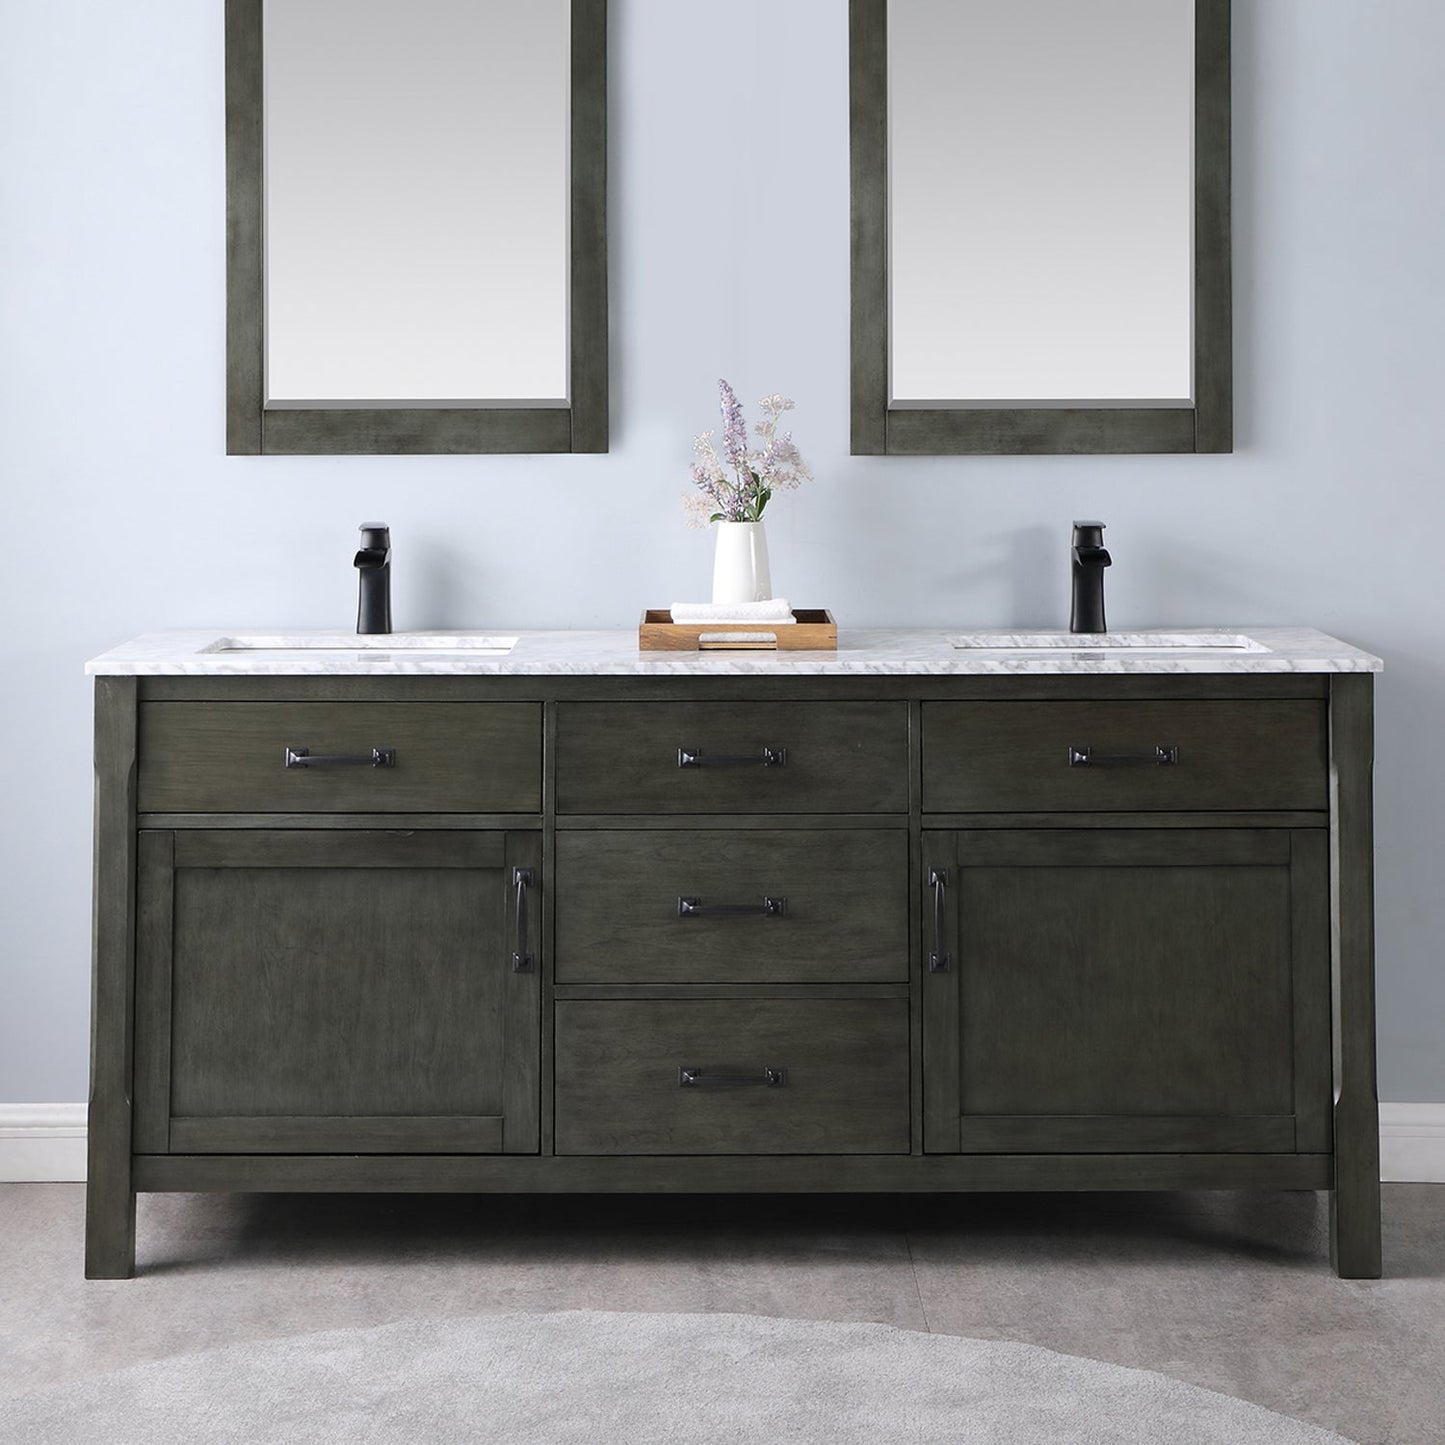 Maribella 72" Double Bathroom Vanity Set in Rust Black and Carrara White Marble Countertop without Mirror